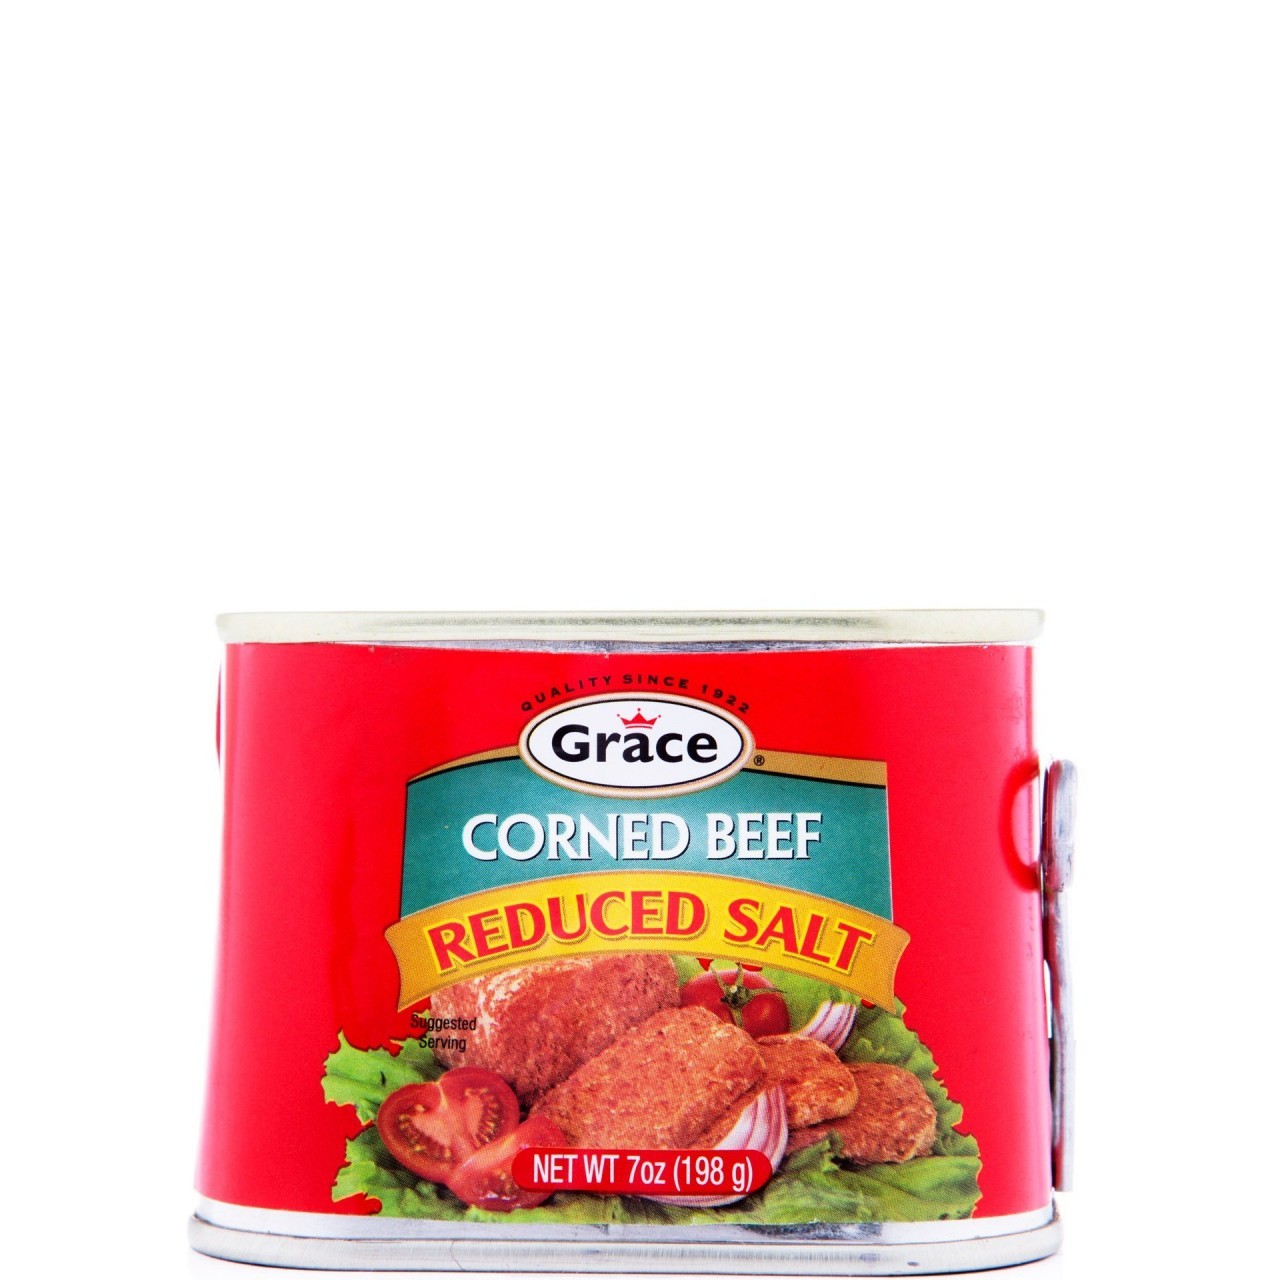 GRACE CORNED BEEF LOW SALT 7oz